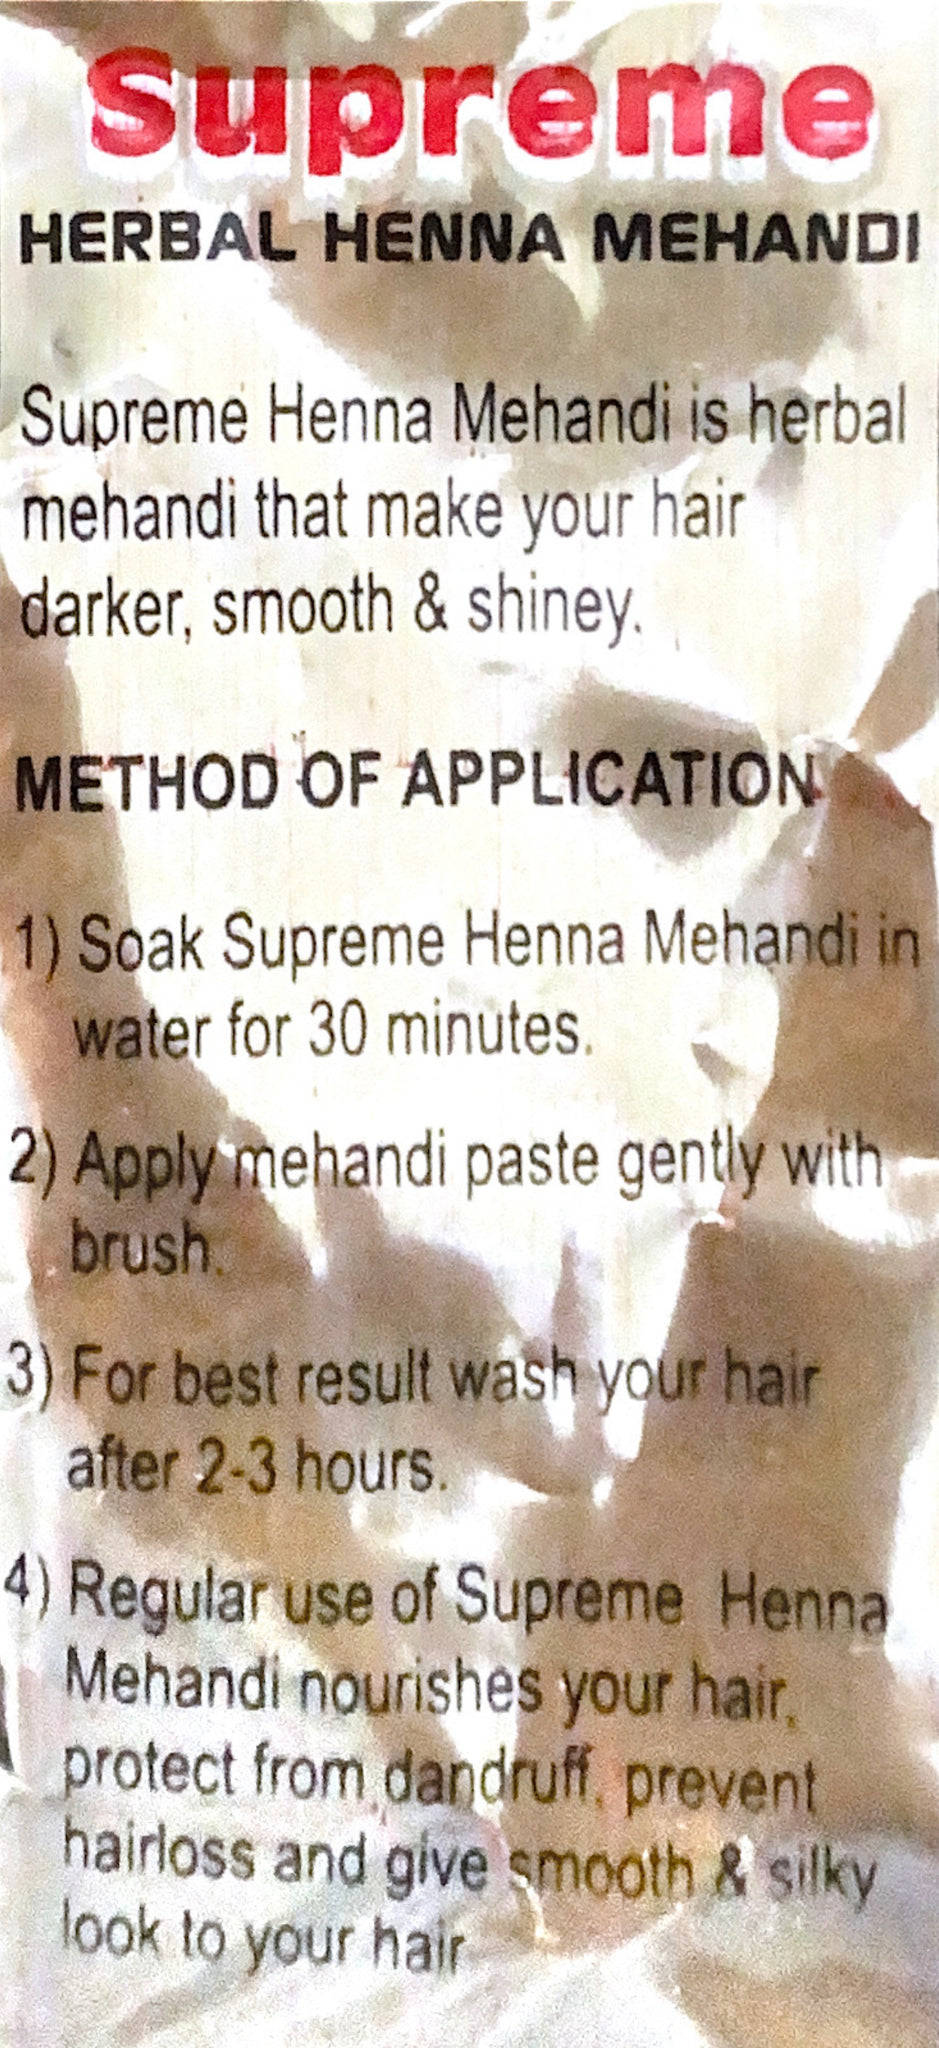 Herbal Henna Mehandi (Black)